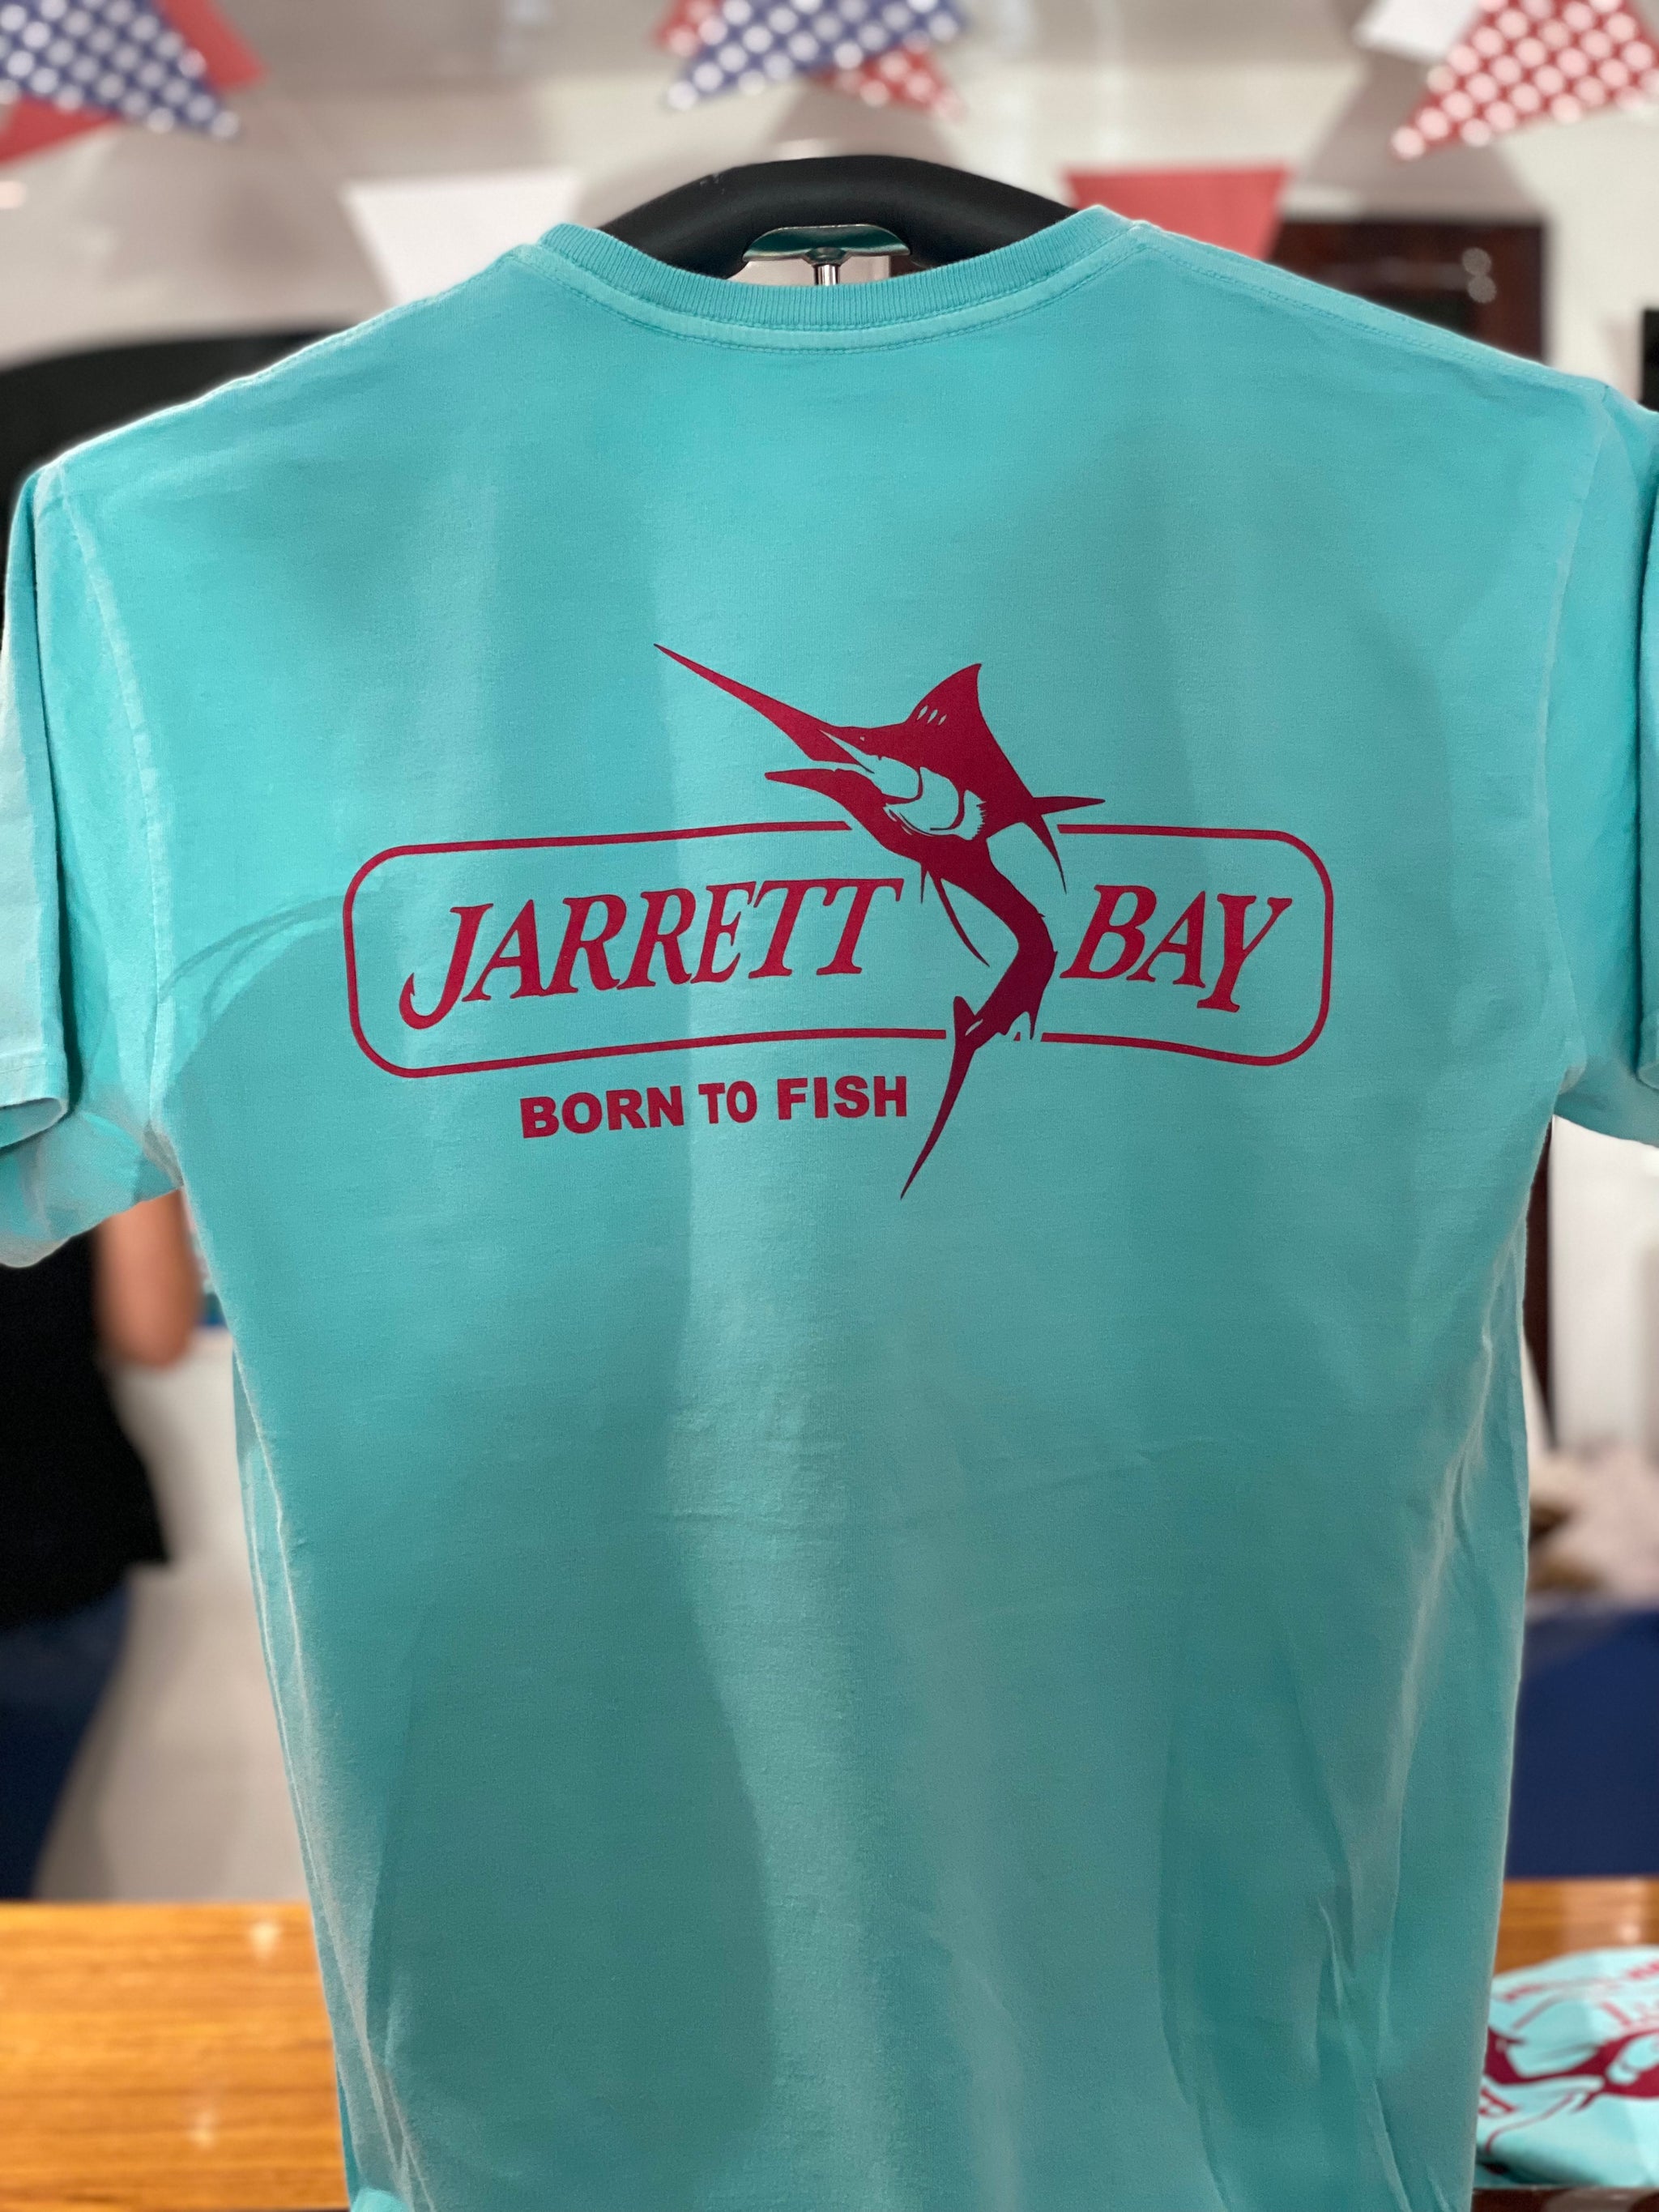 Born to Fish T-Shirt - Jarrett Bay Boathouse